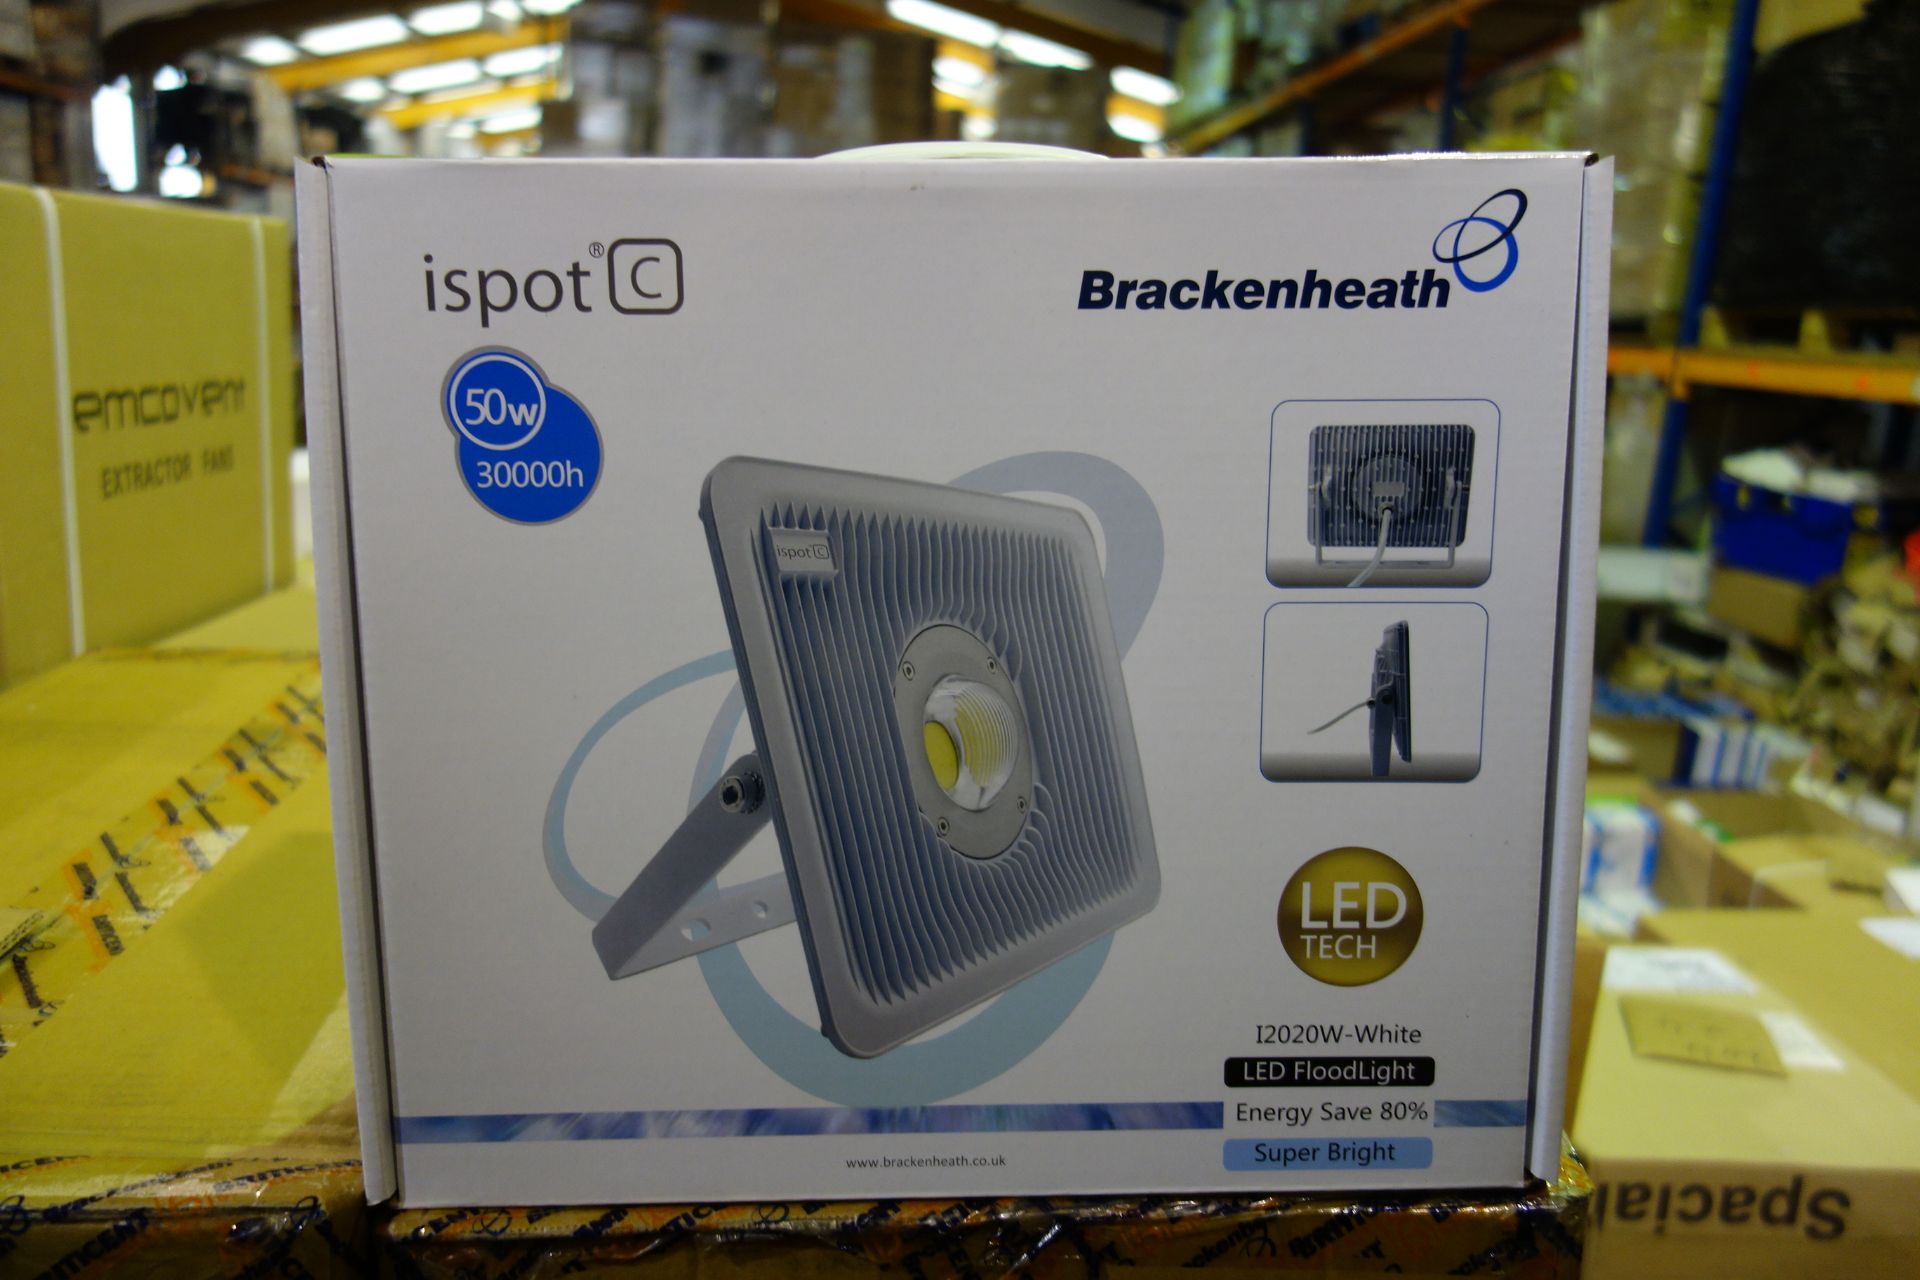 4 X Brakenheath Ispot 12020w 50w White LED Flood Light